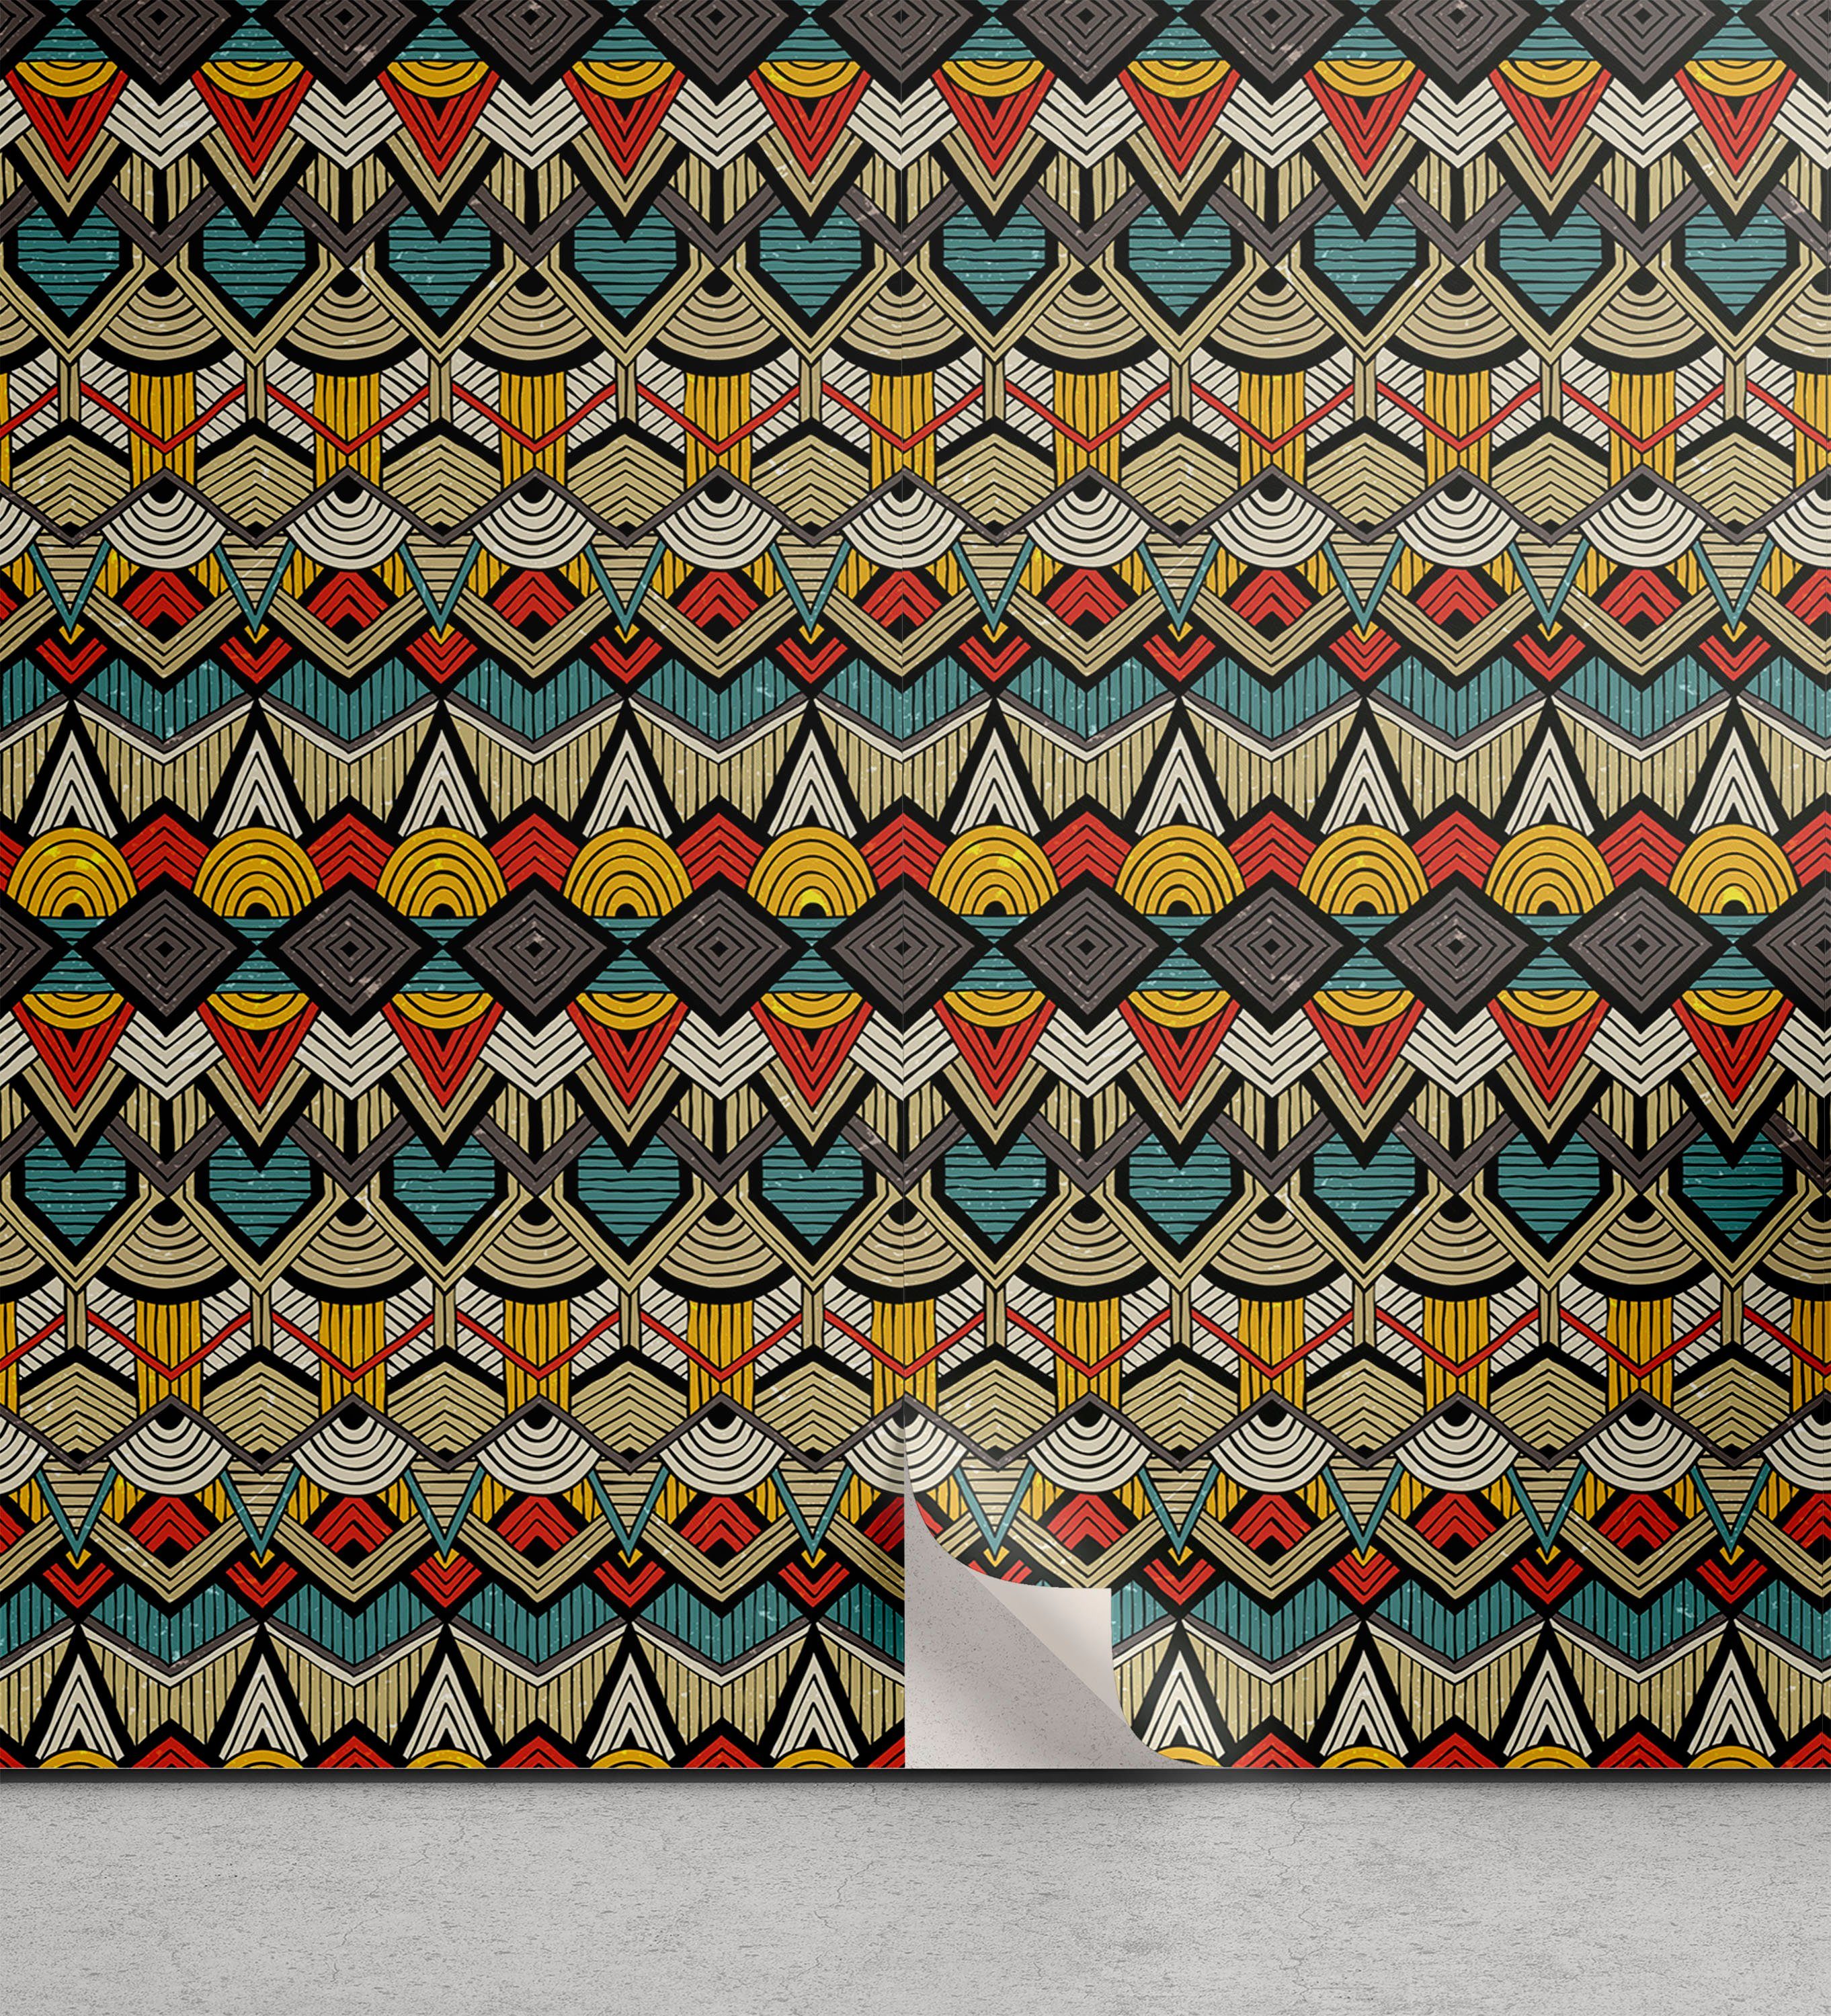 Abakuhaus Vinyltapete selbstklebendes afrikanisch Sharp Wohnzimmer Volkskunst Küchenakzent, Motive